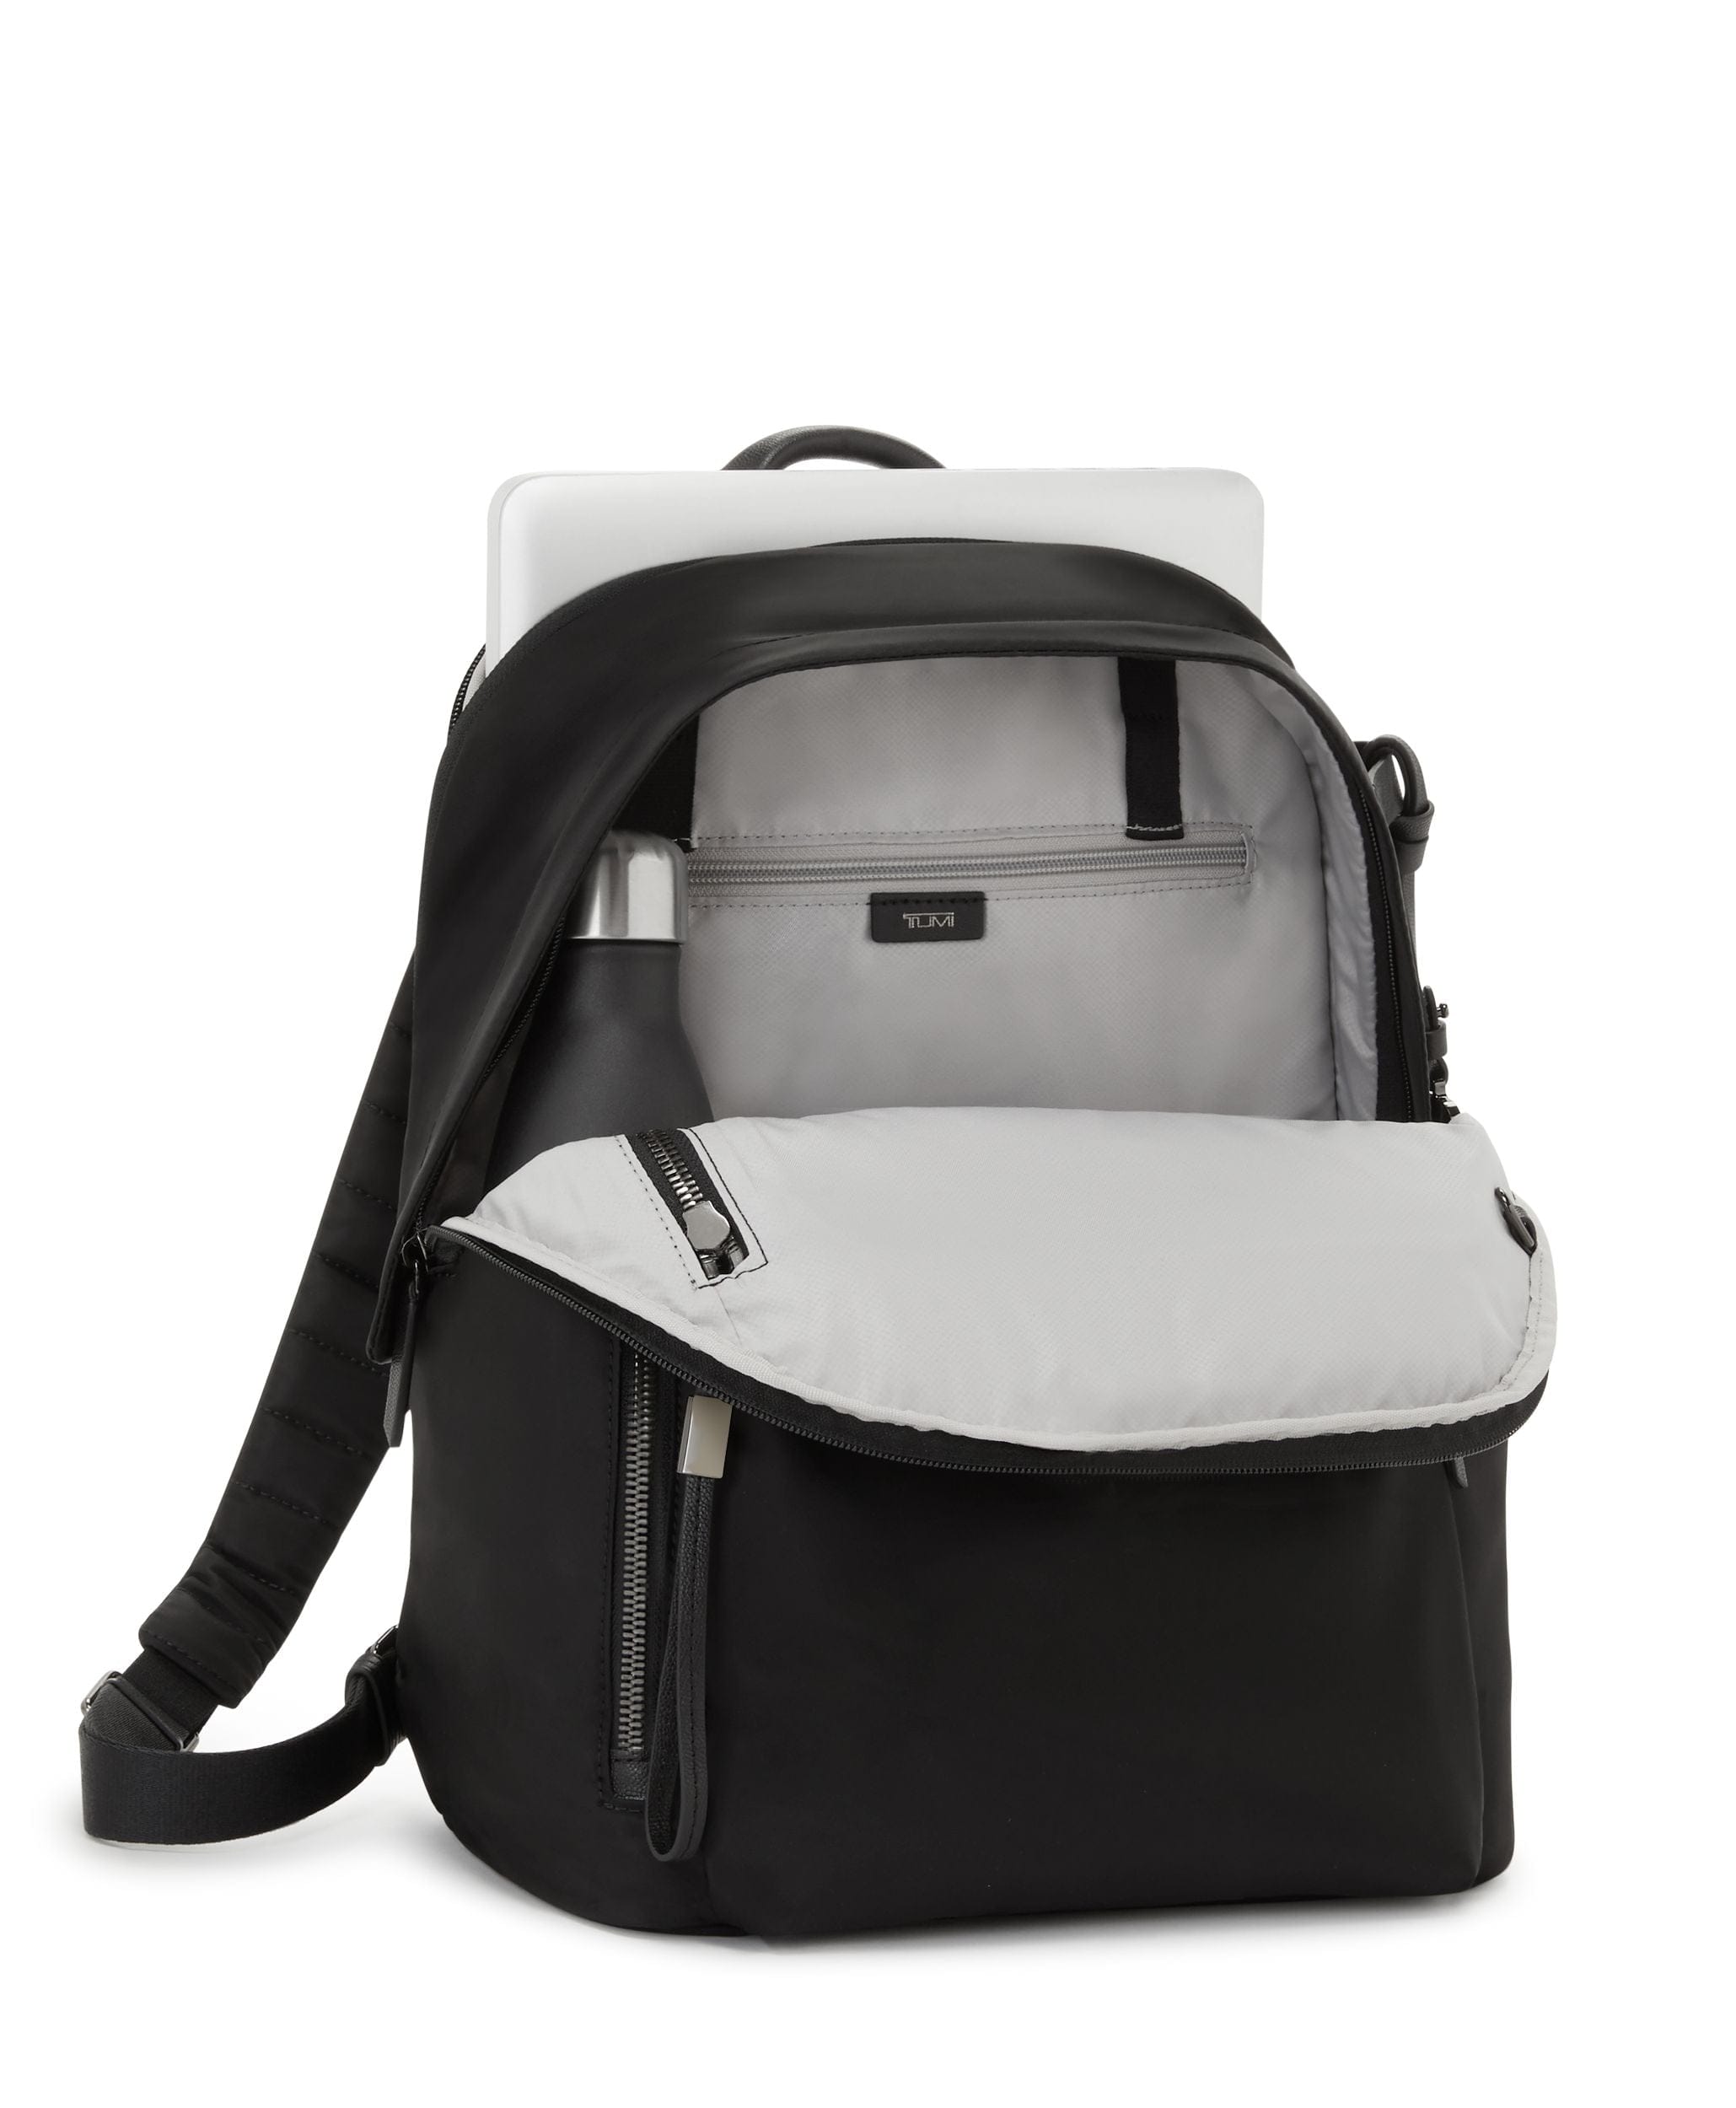 Shop Halsey Backpack by TUMI UAE - TUMI